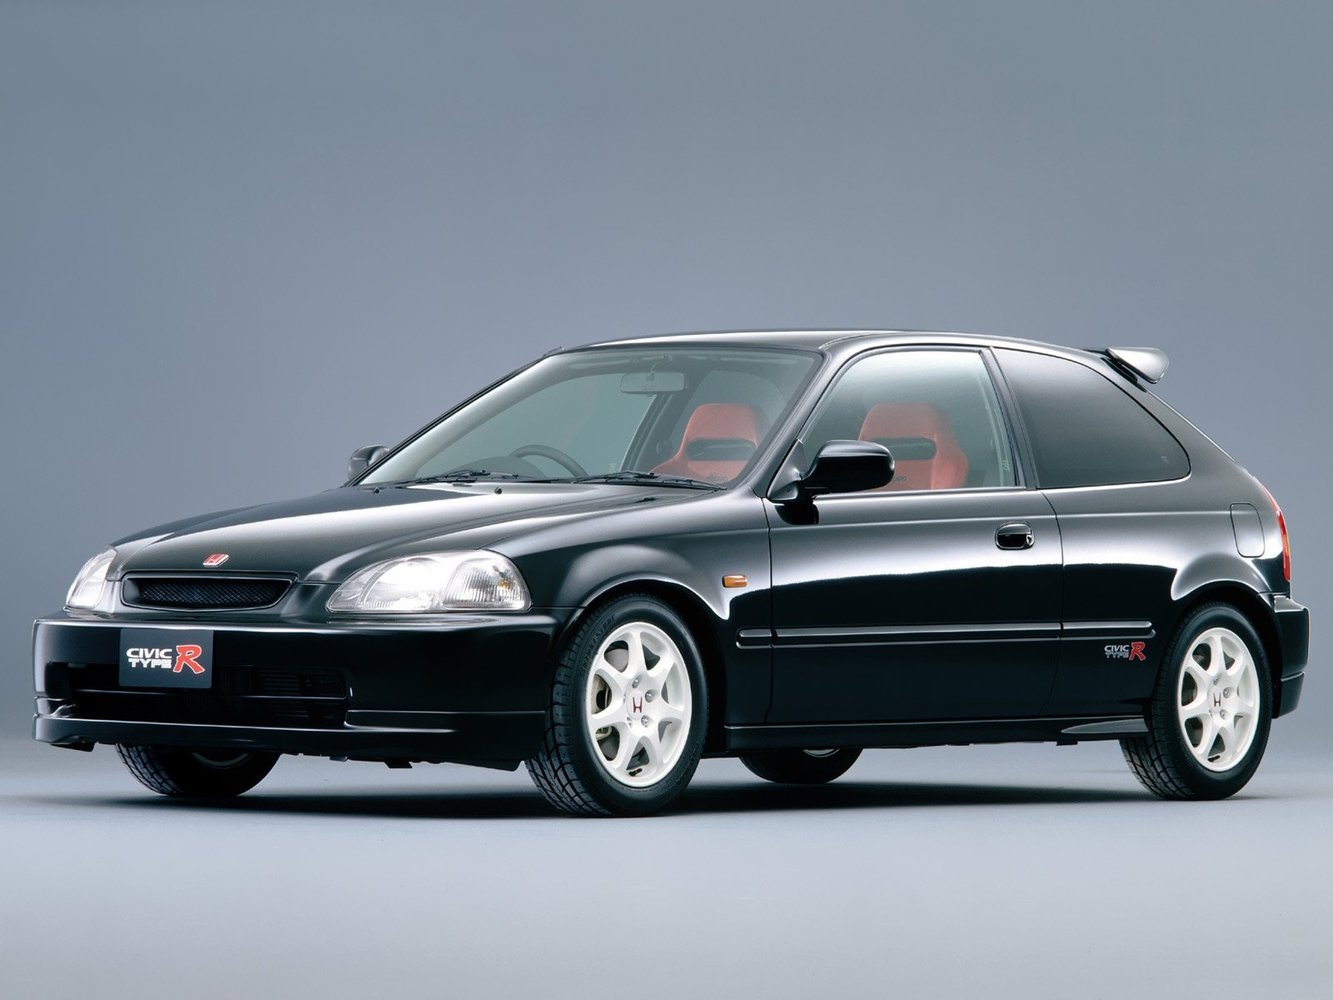 Honda Civic Type R 1996 - 2000